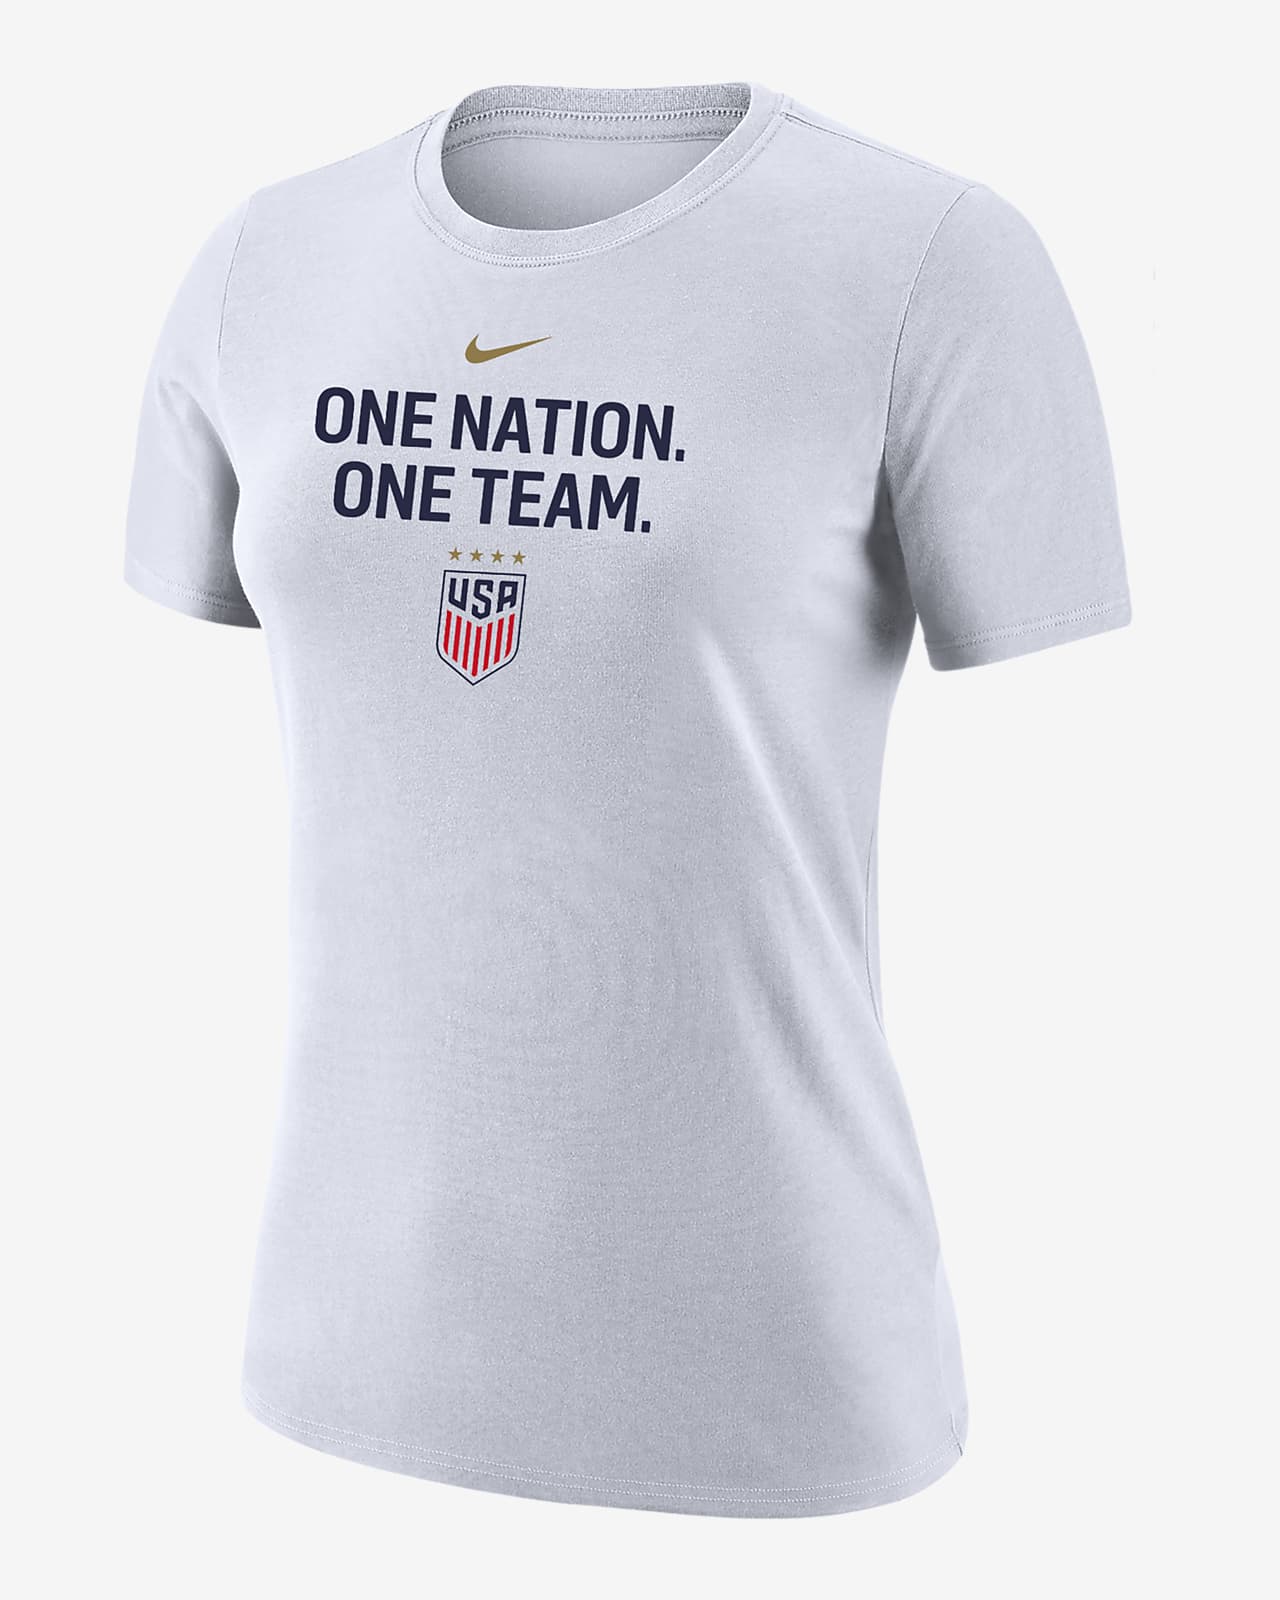 USWNT Women's Nike Soccer T-Shirt